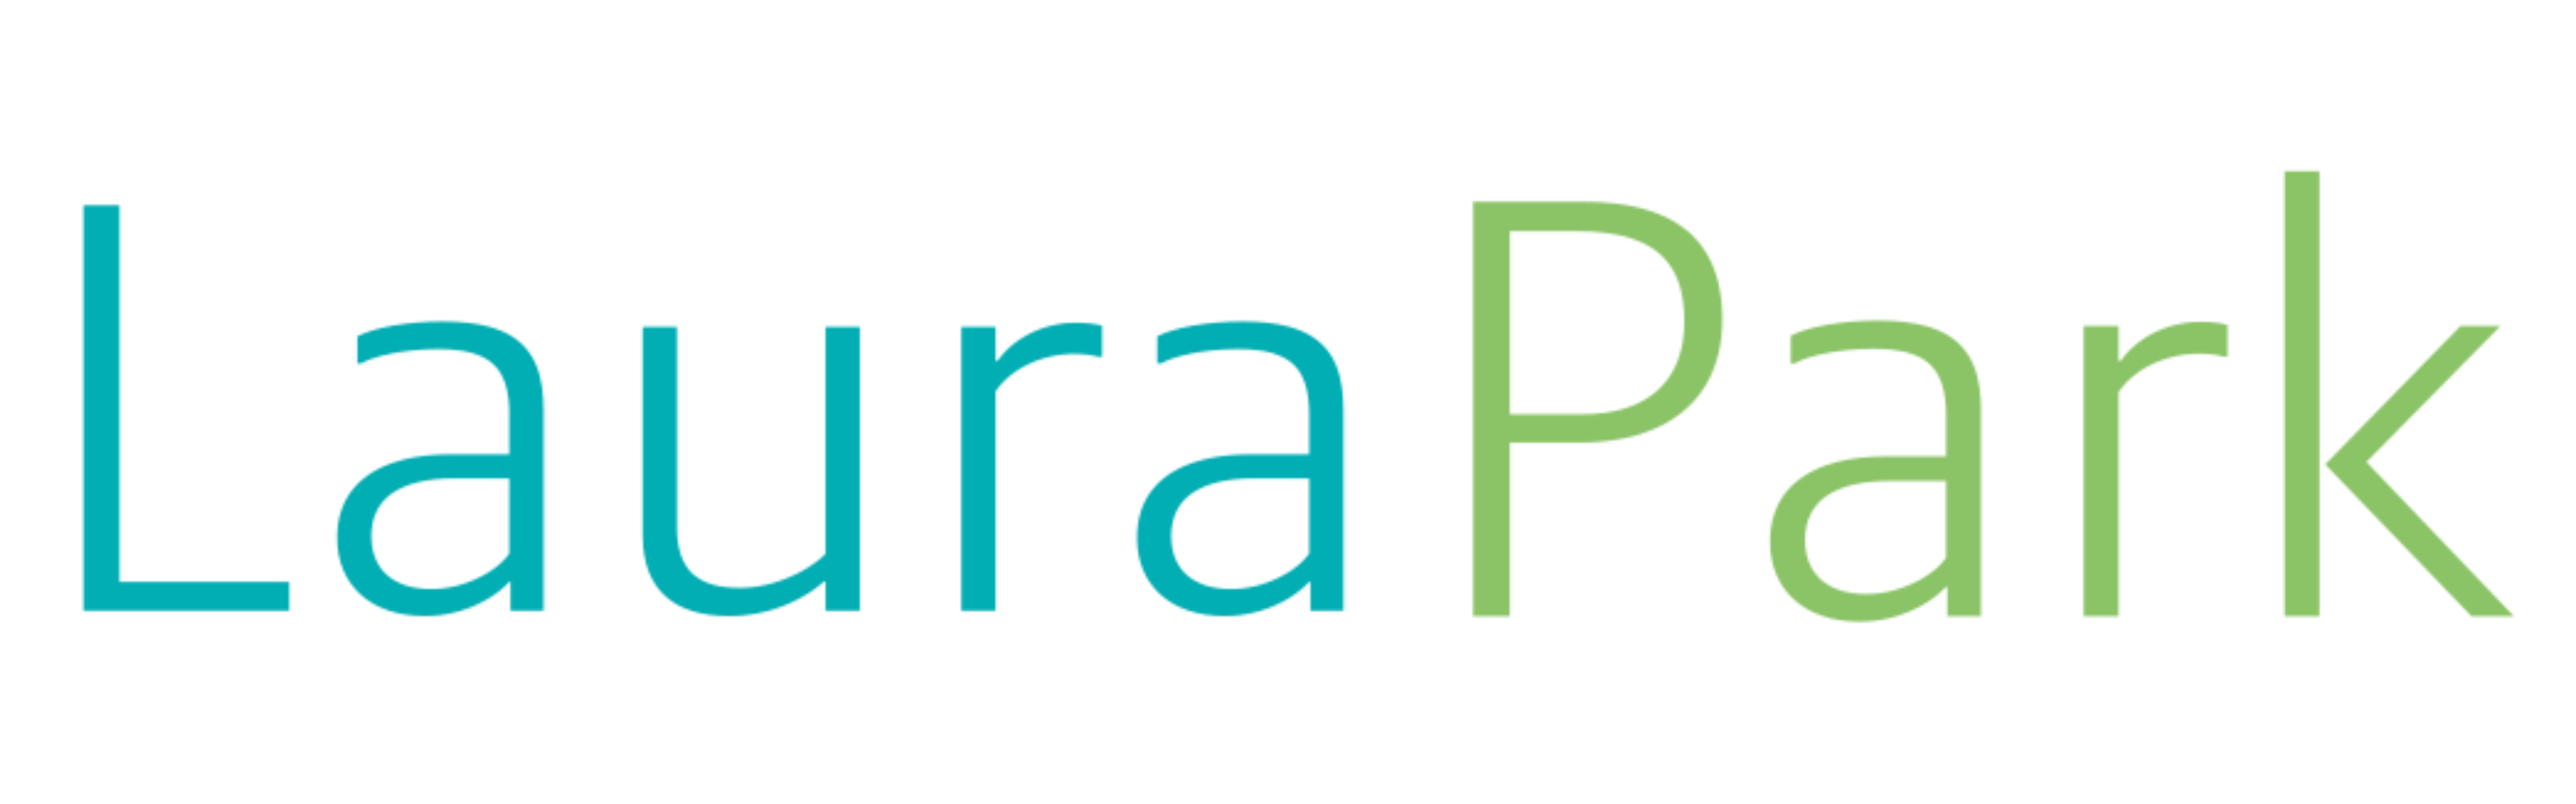 Laura Park logo